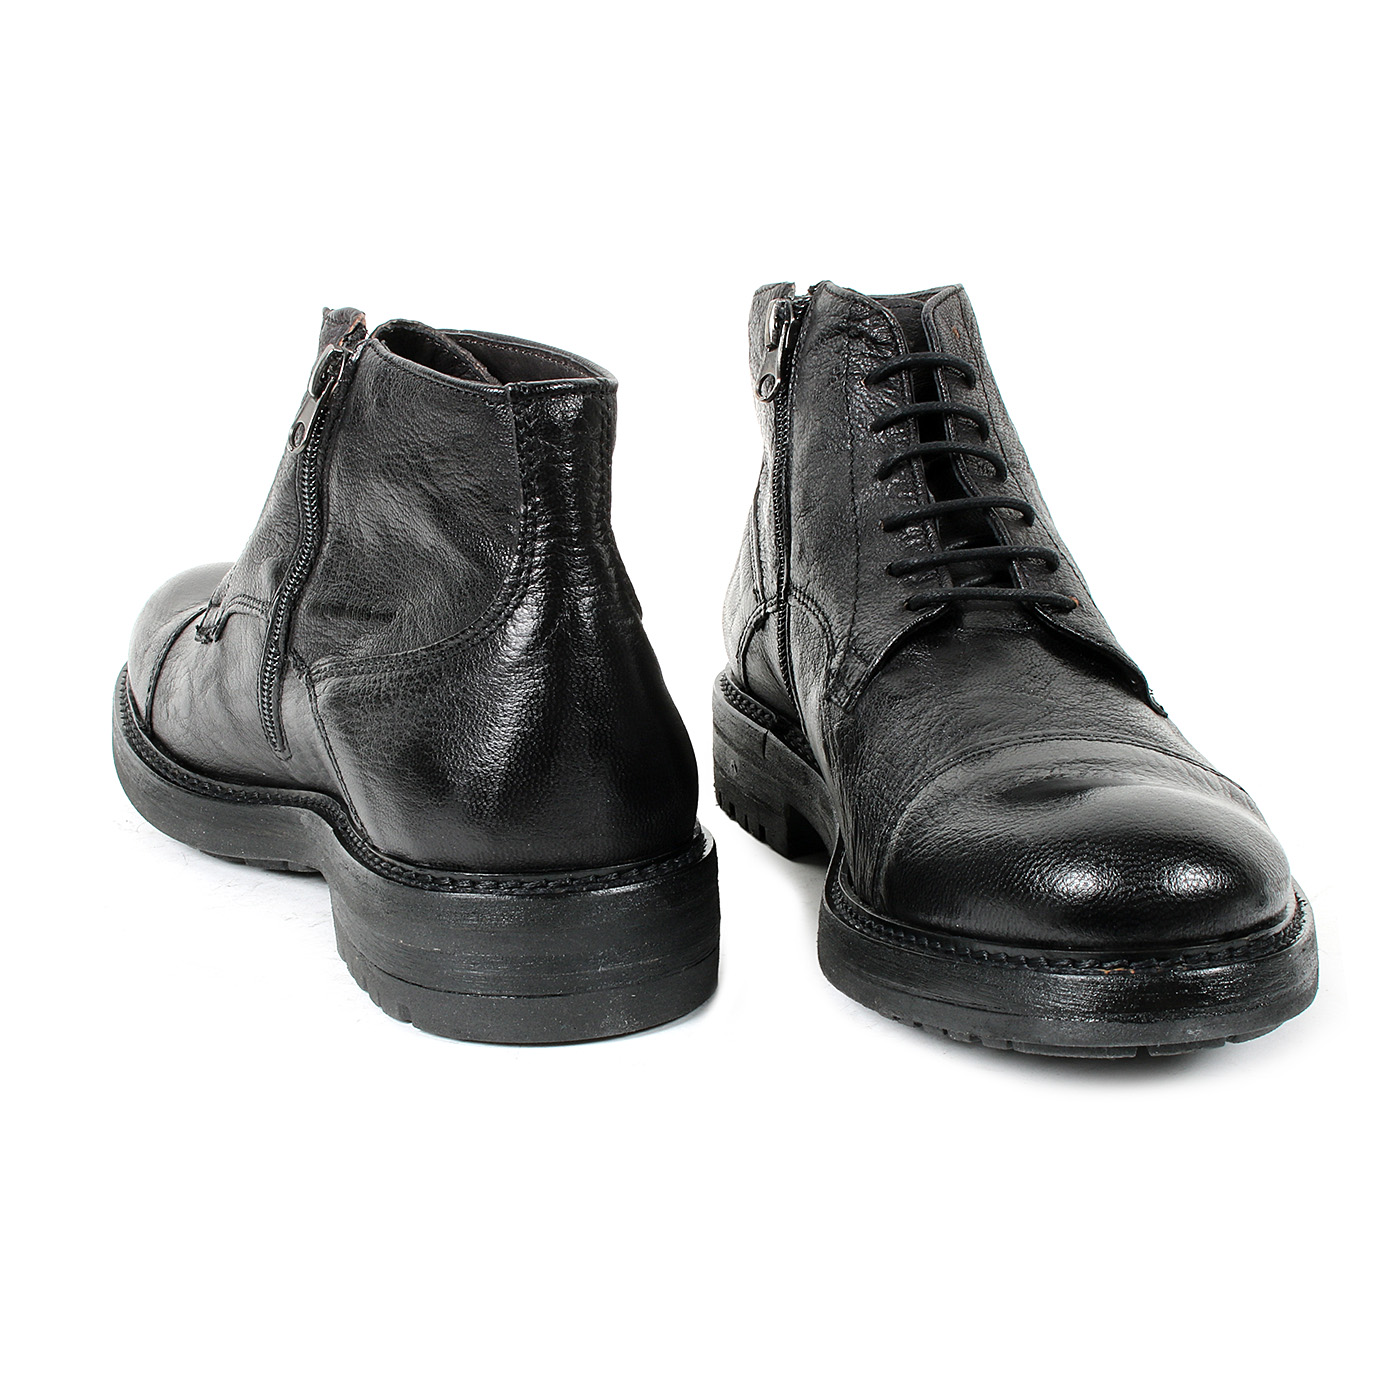 scarpe alte nere eleganti inexpensive 9d1d0 3f58f